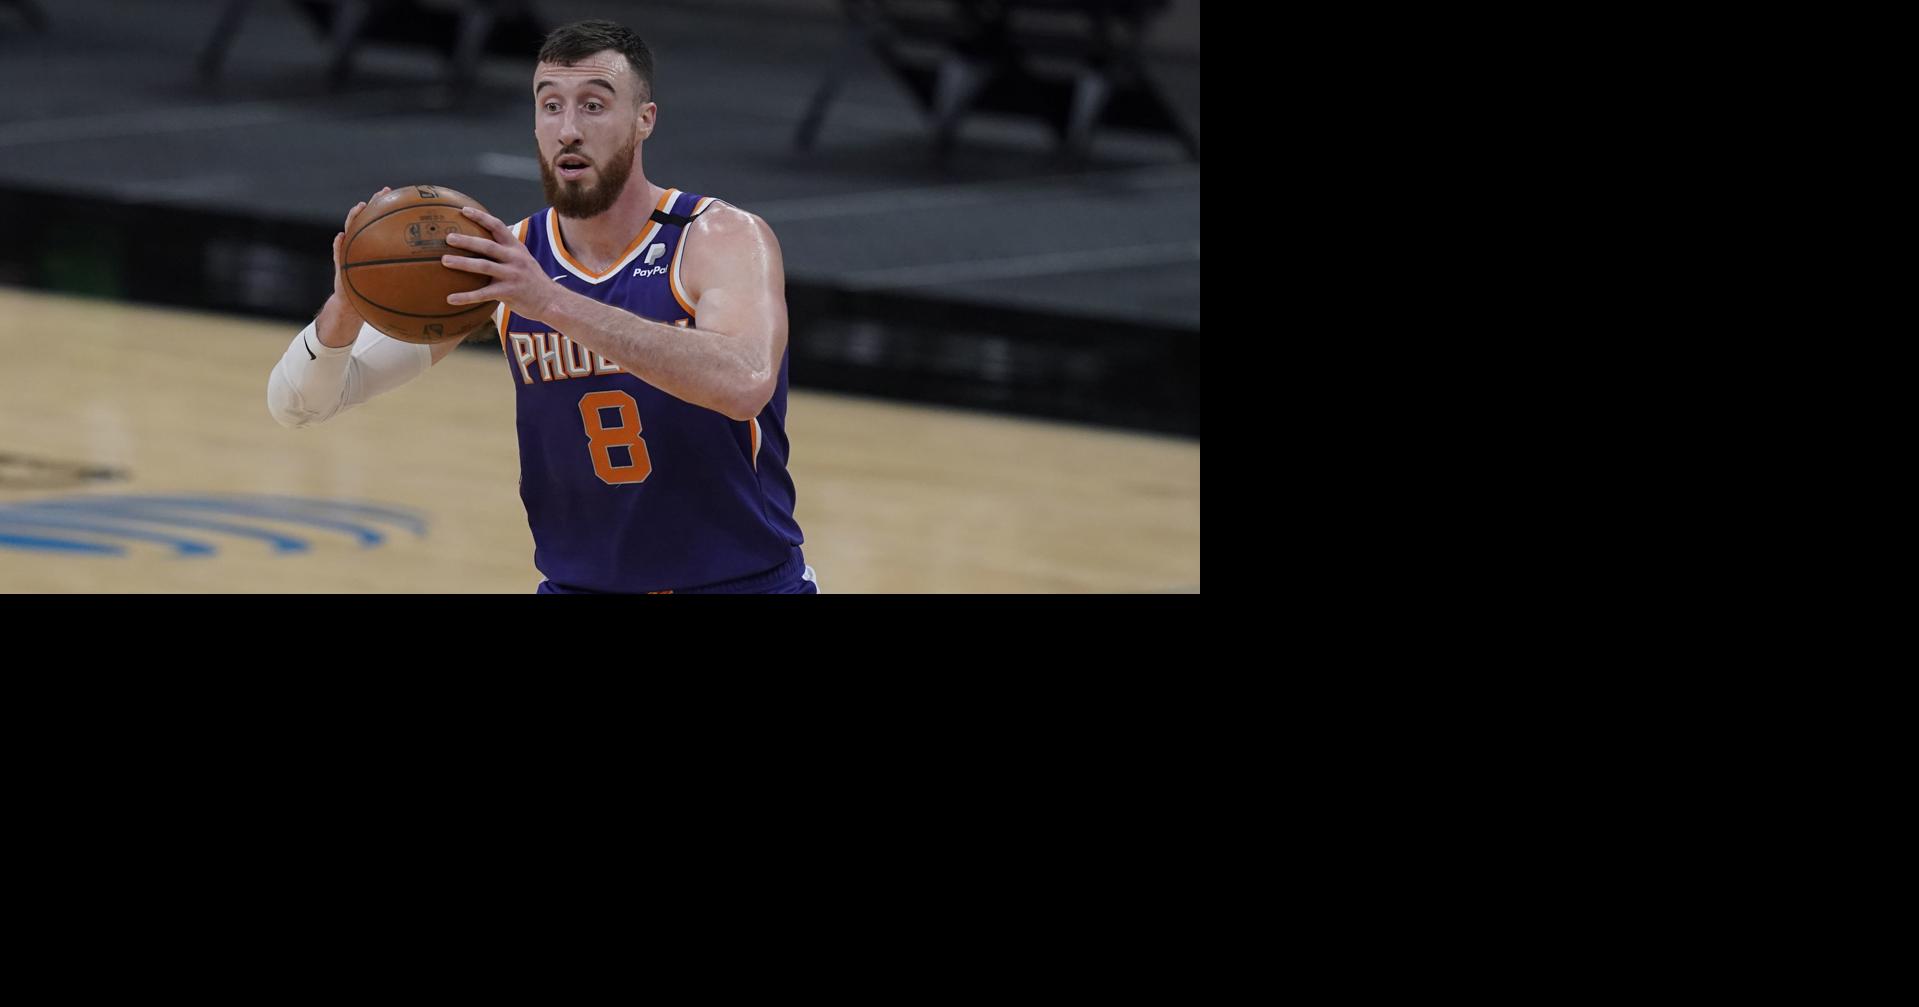 Kaminsky scores career-high 31 points for streaking Suns